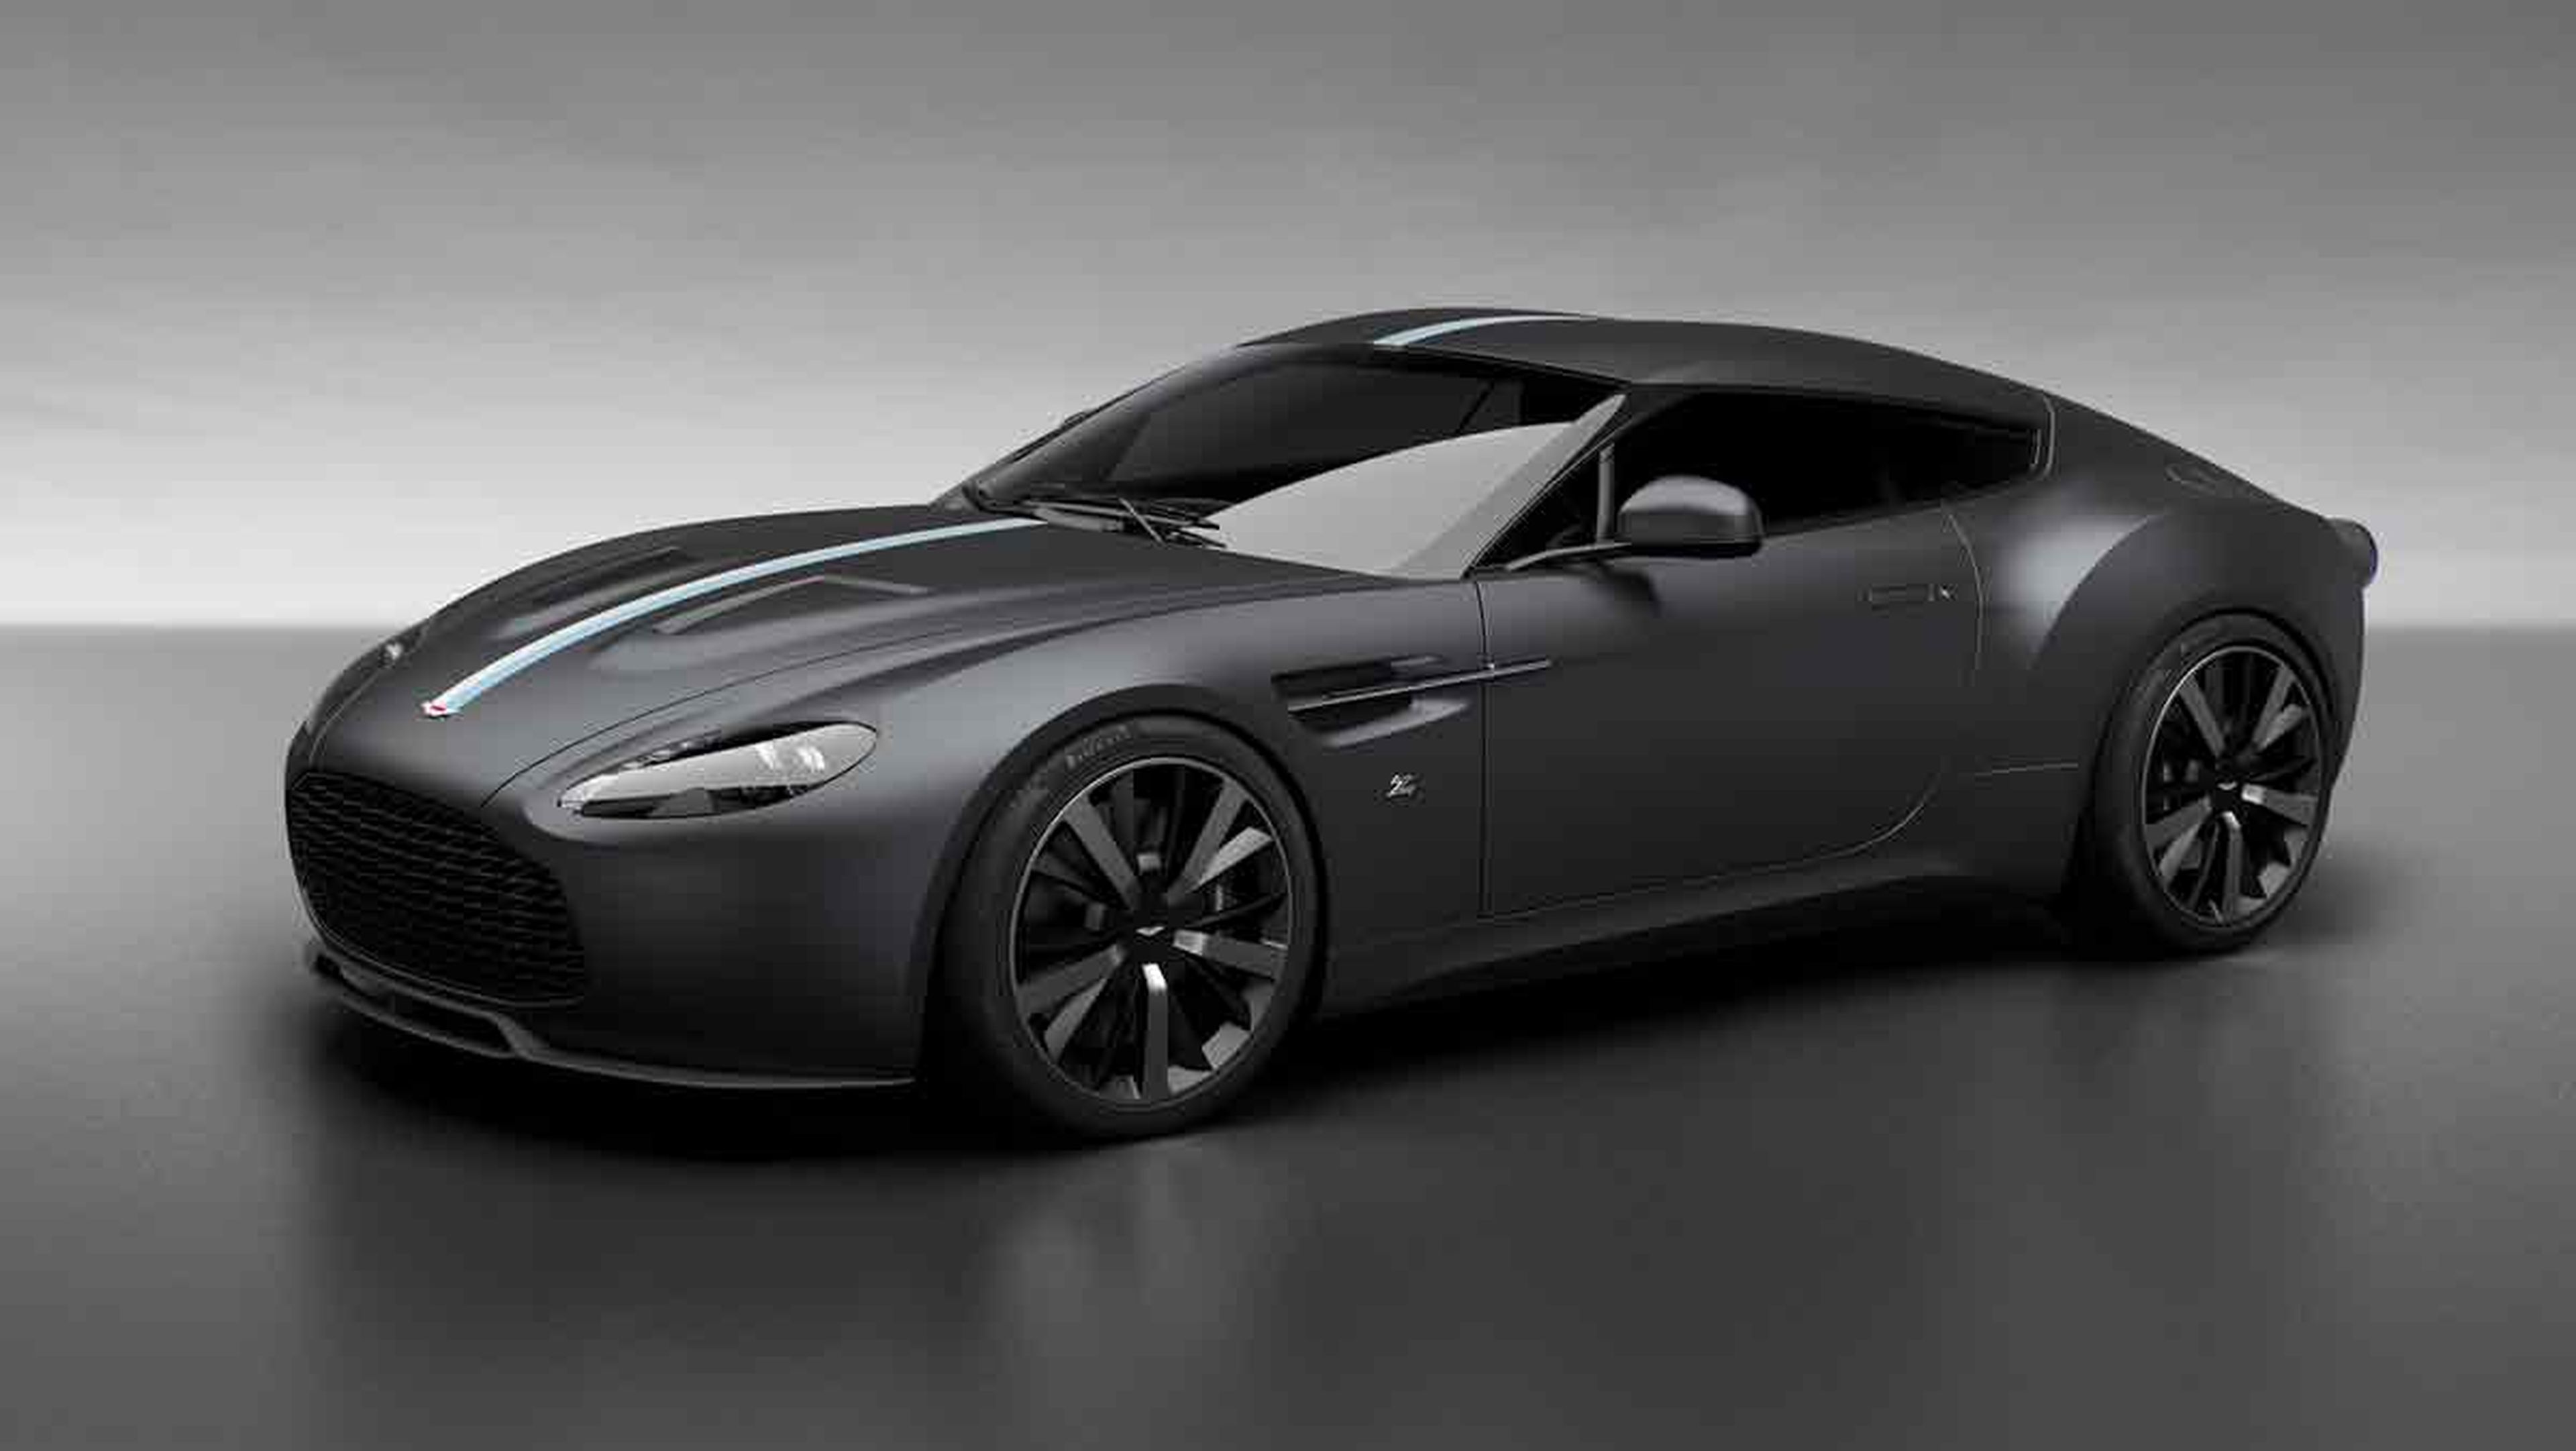 Aston Martin V12 Zagato Heritage Twins